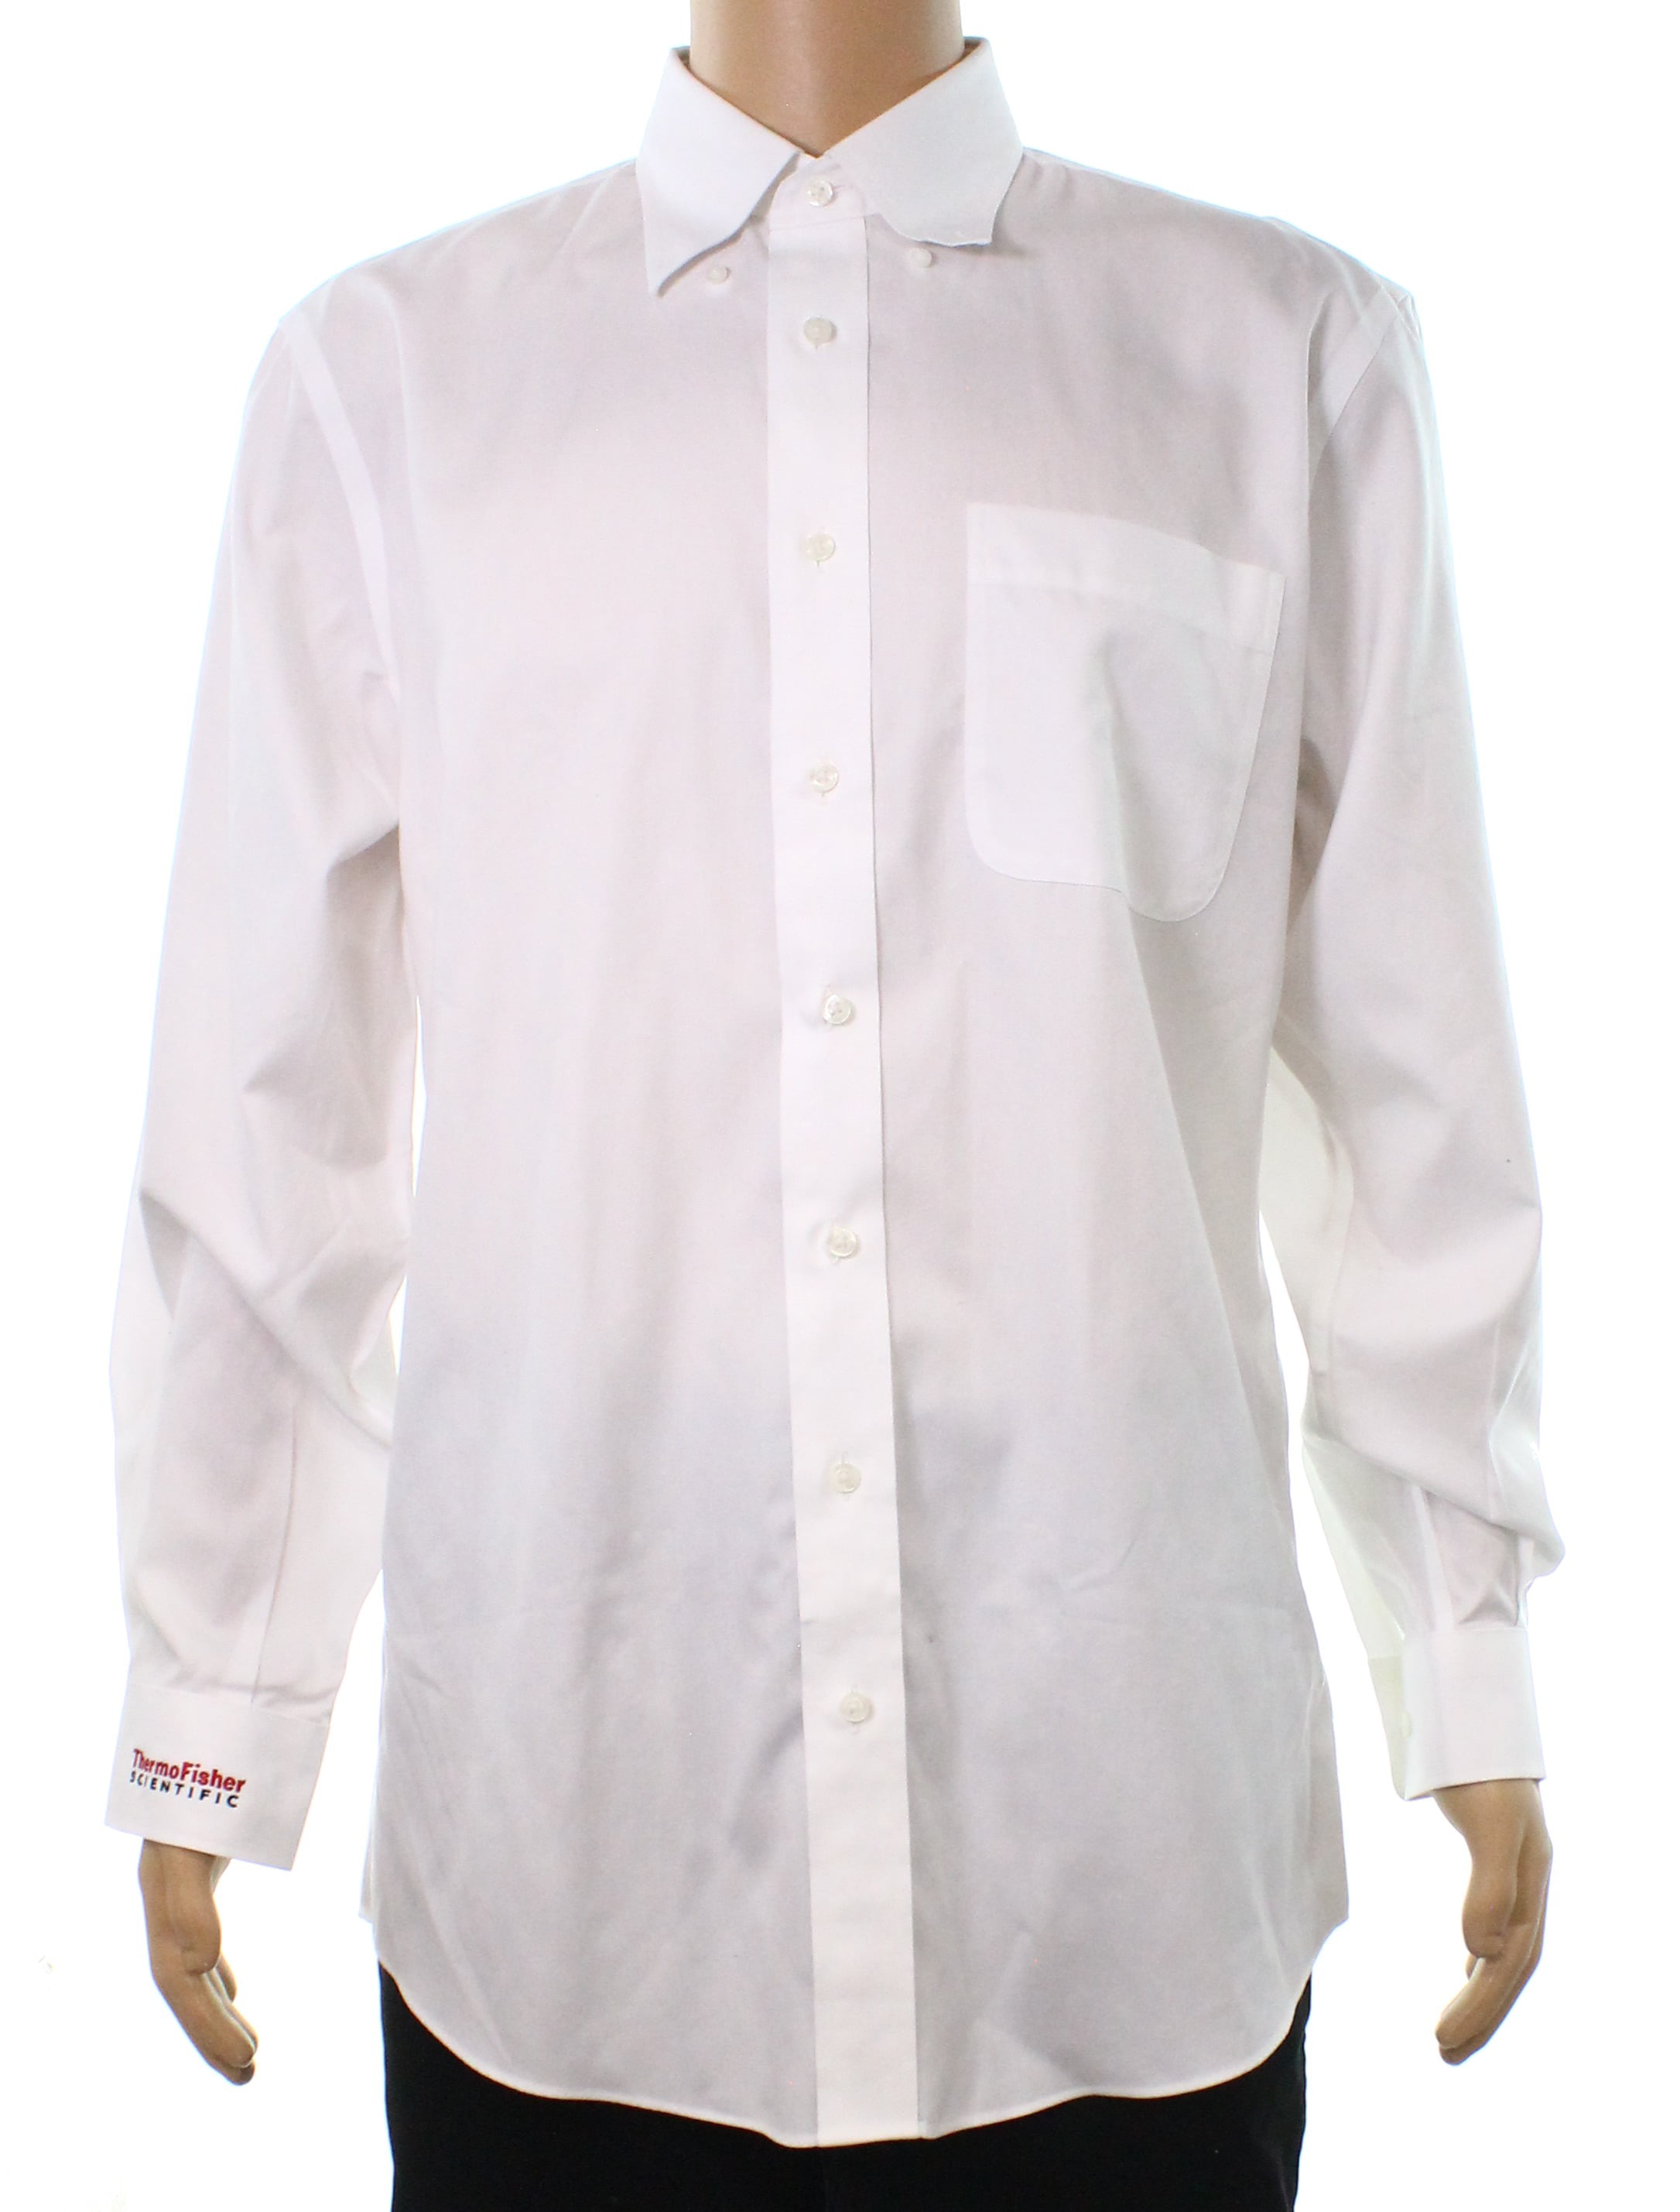 mens white dress shirts walmart